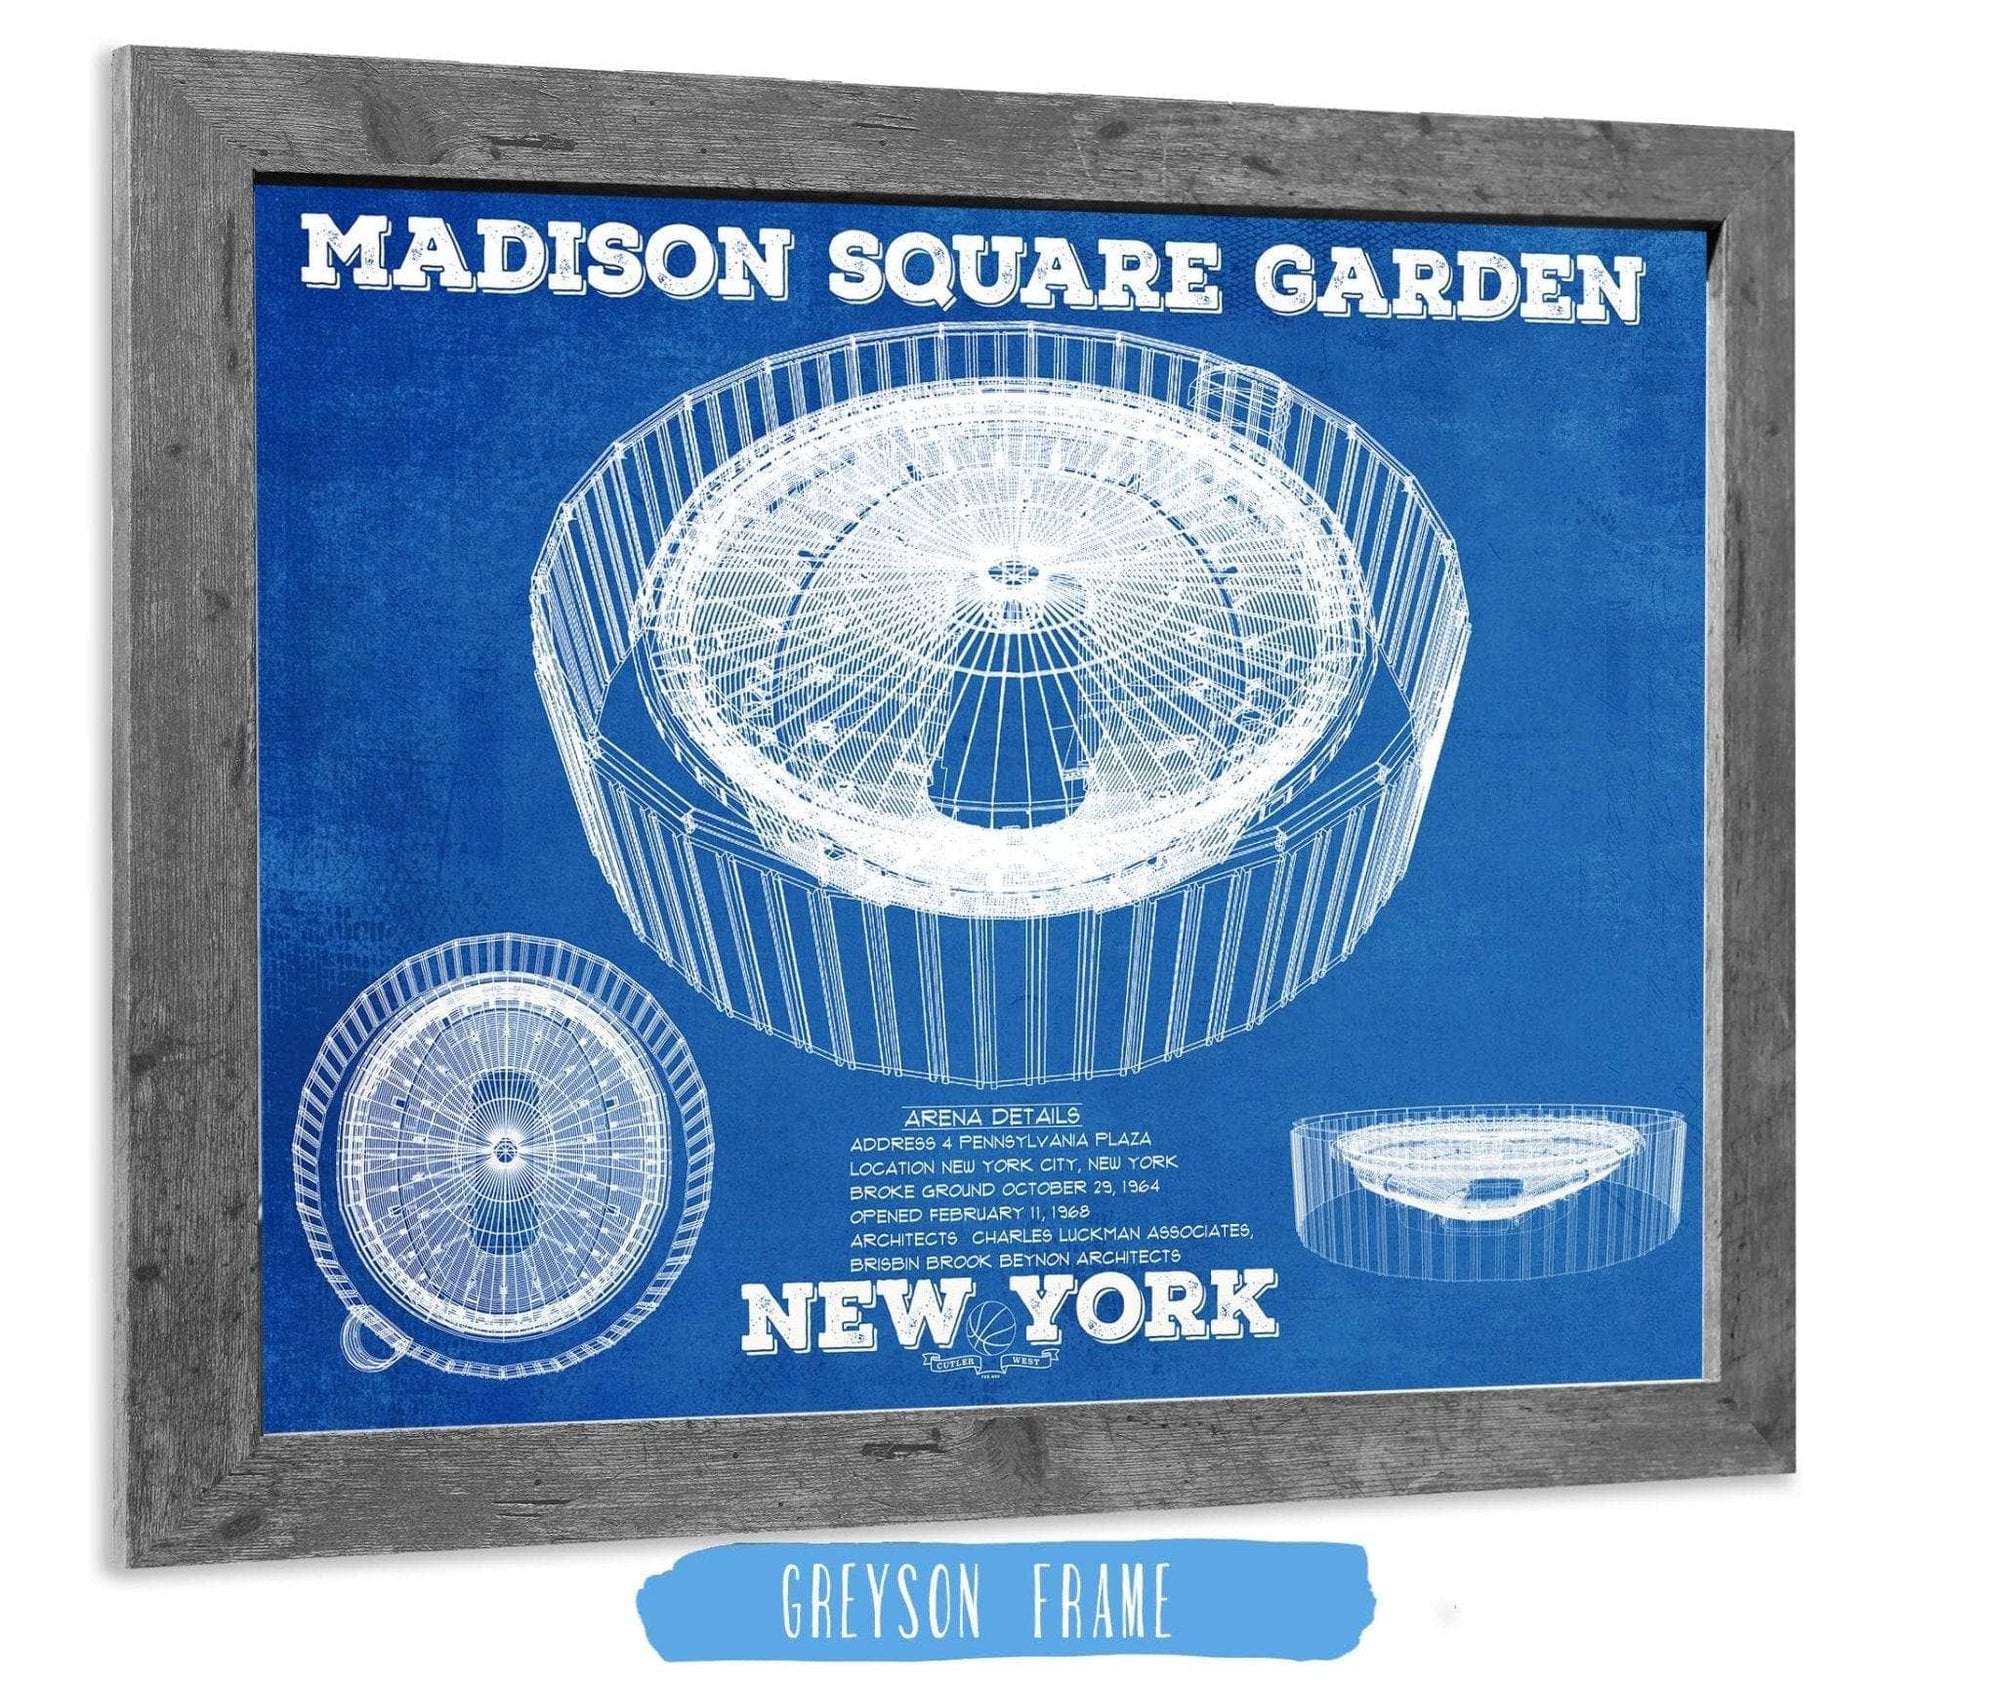 Cutler West Basketball Collection 14" x 11" / Greyson Frame New York Knicks - Madison Square Garden Vintage Blueprint  NBA Basketball NBA  Team Color Print 723007842_64583